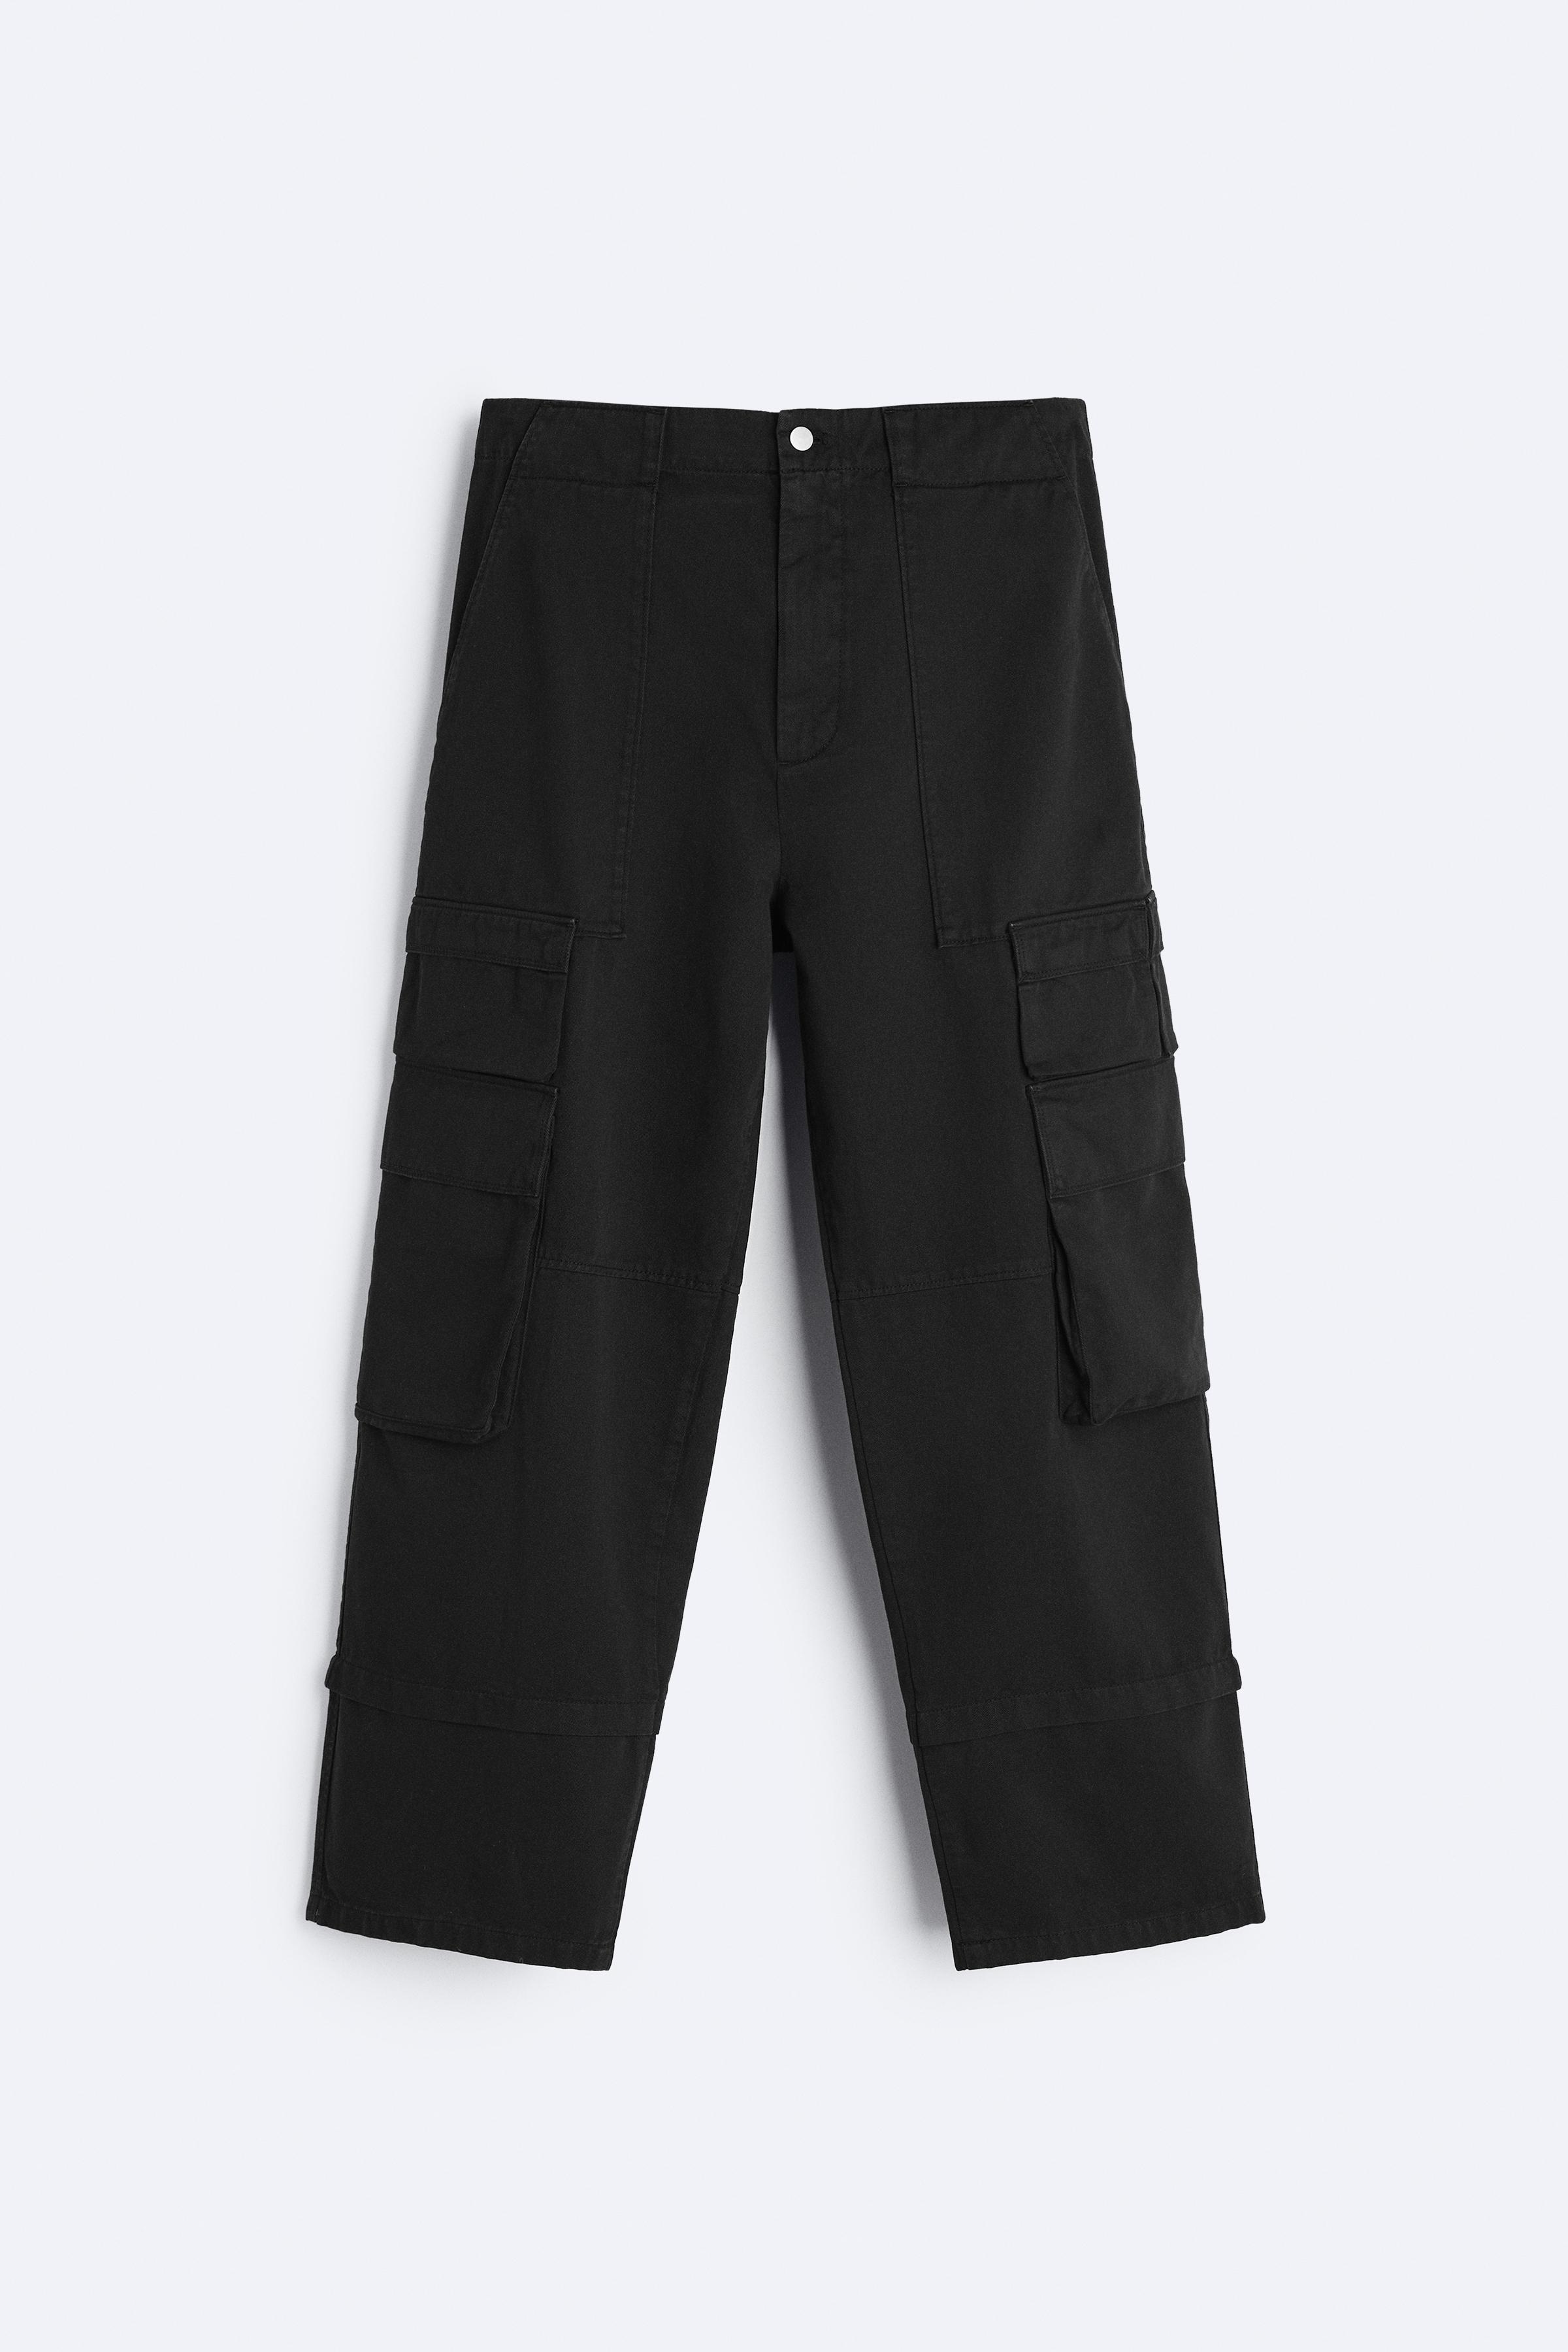 ZARA Black Cargo Jeans for Men